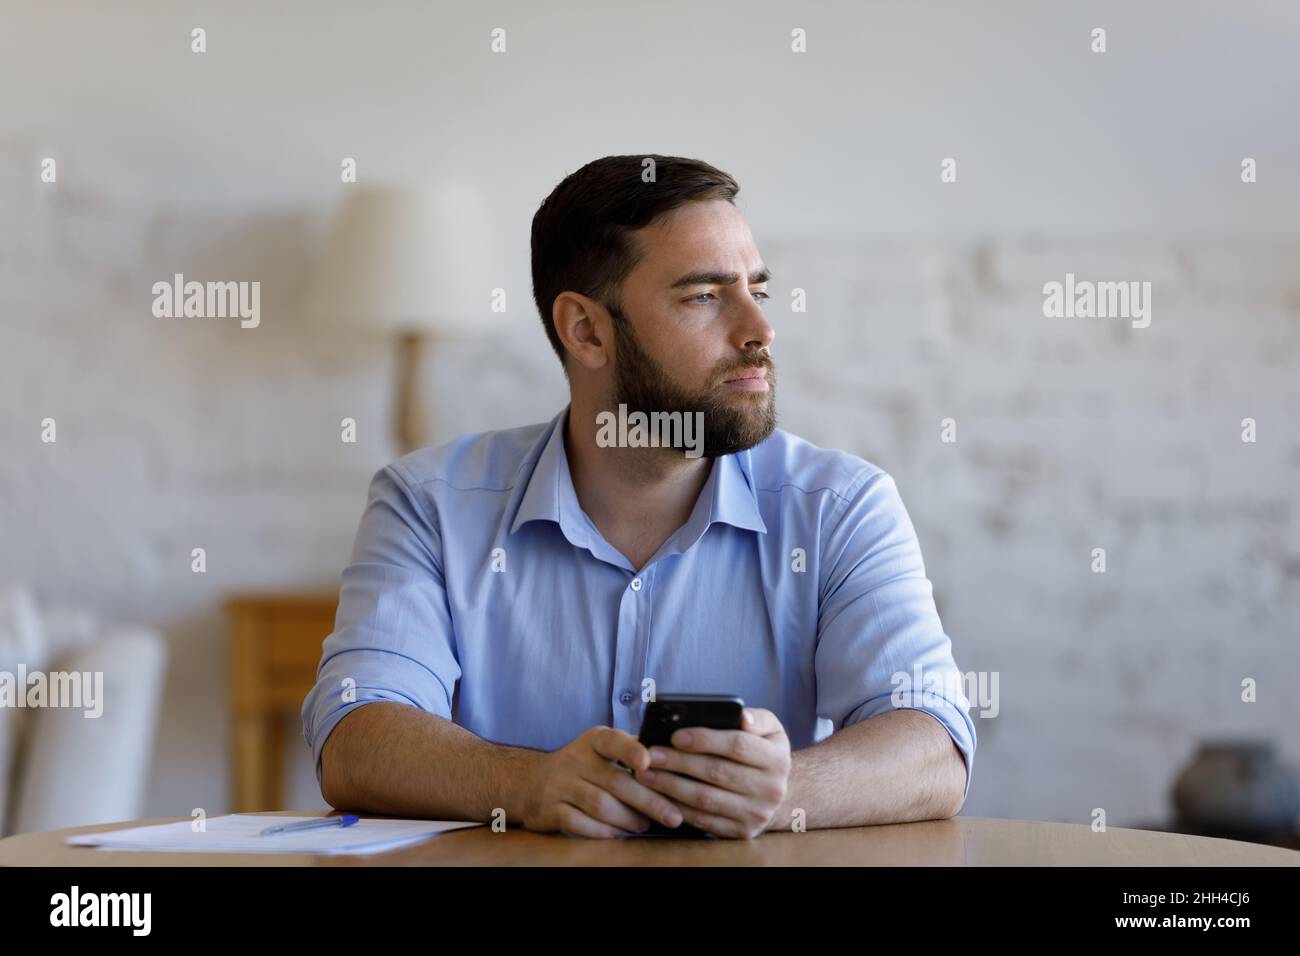 Thoughtful pensive millennial smartphone user man looking away Stock Photo